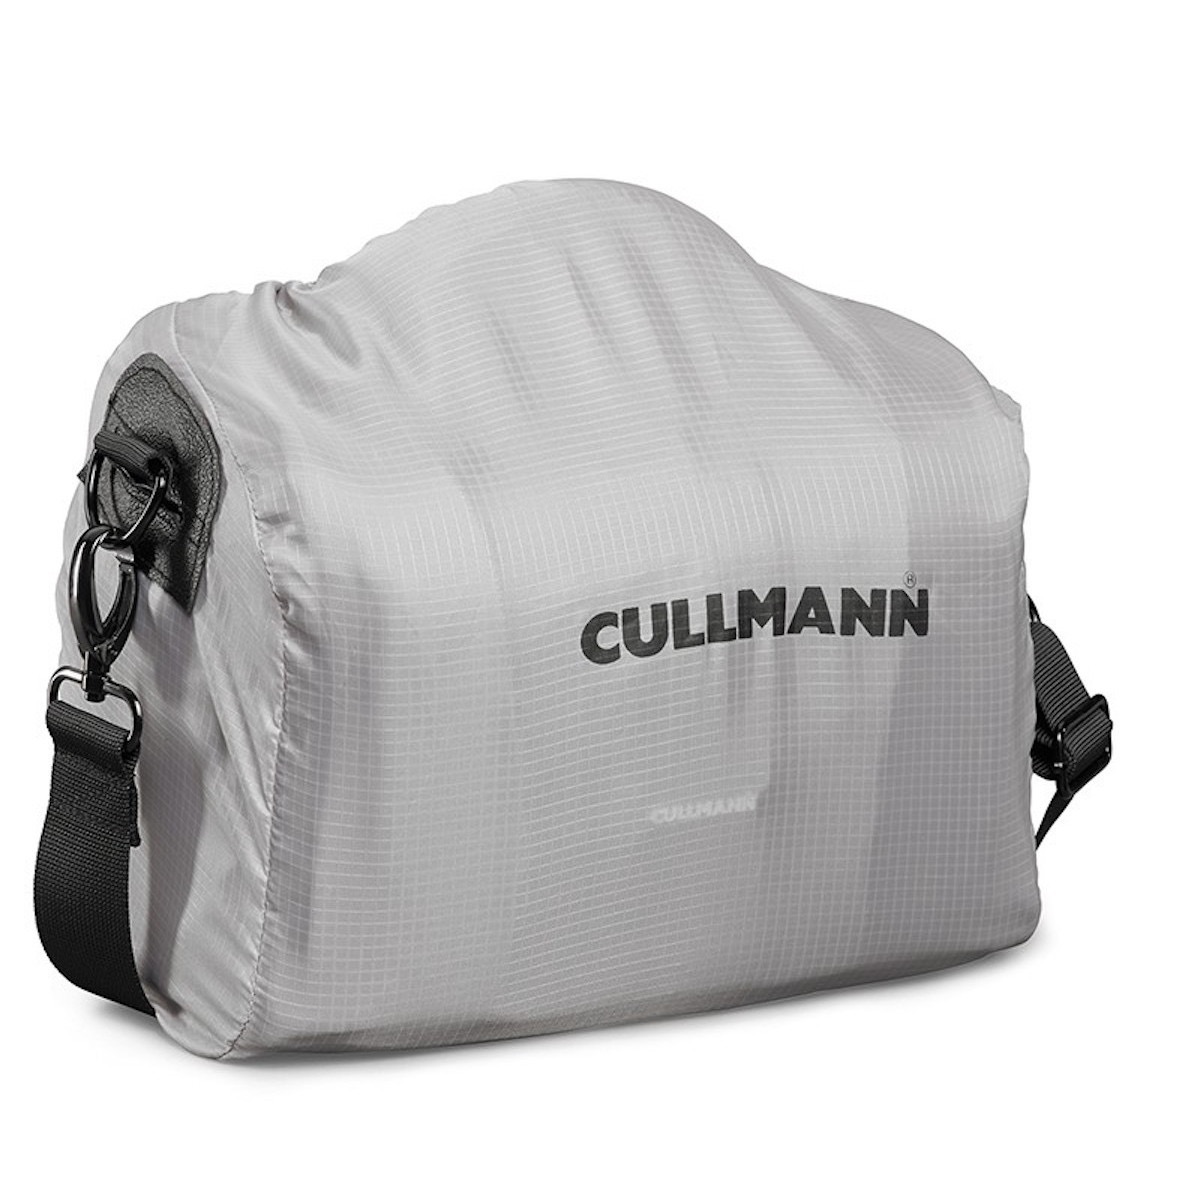 Cullmann Sydney pro Maxima 120 